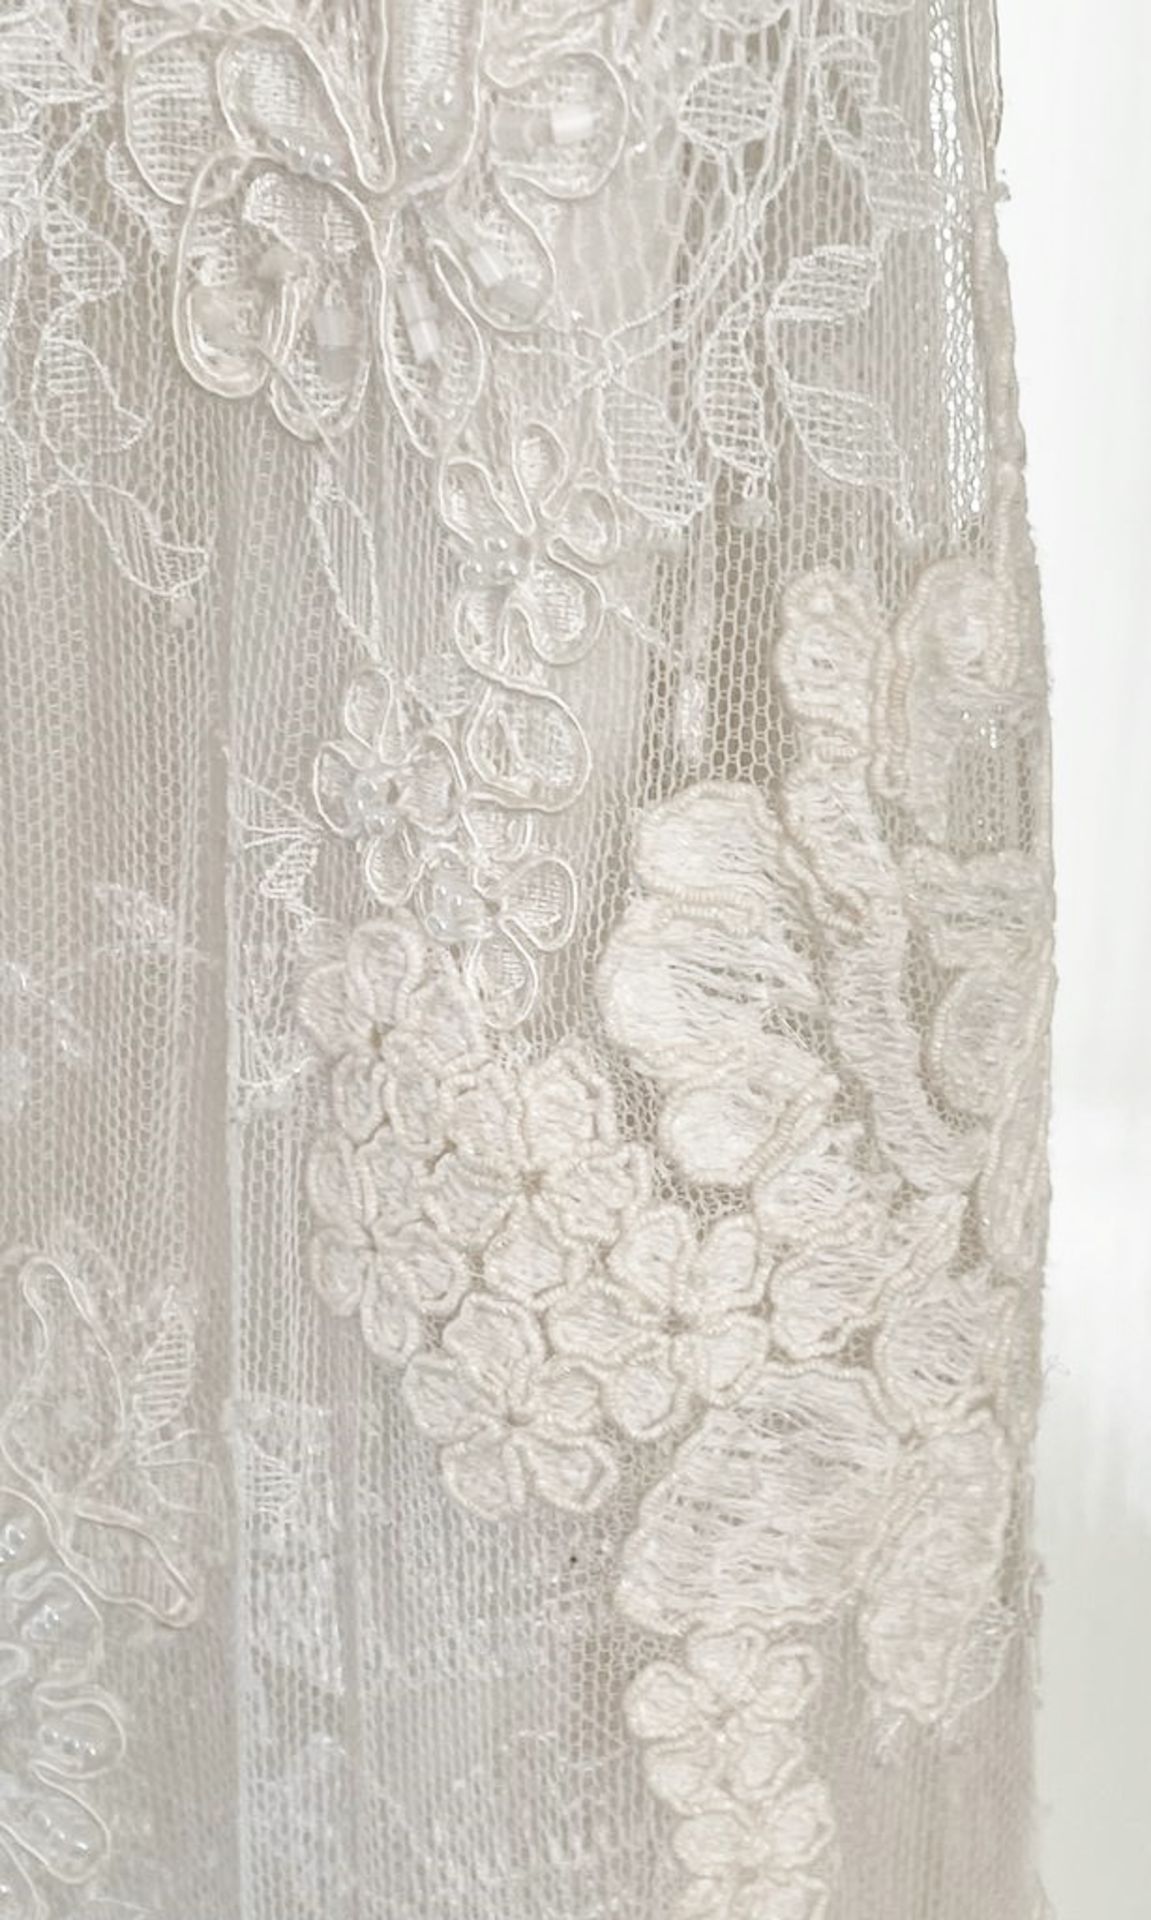 1 x LUSAN MANDONGUS 'Iona' Designer Wedding Dress Bridal Gown - Size: UK 12 - Original RRP £1,950 - Image 4 of 12